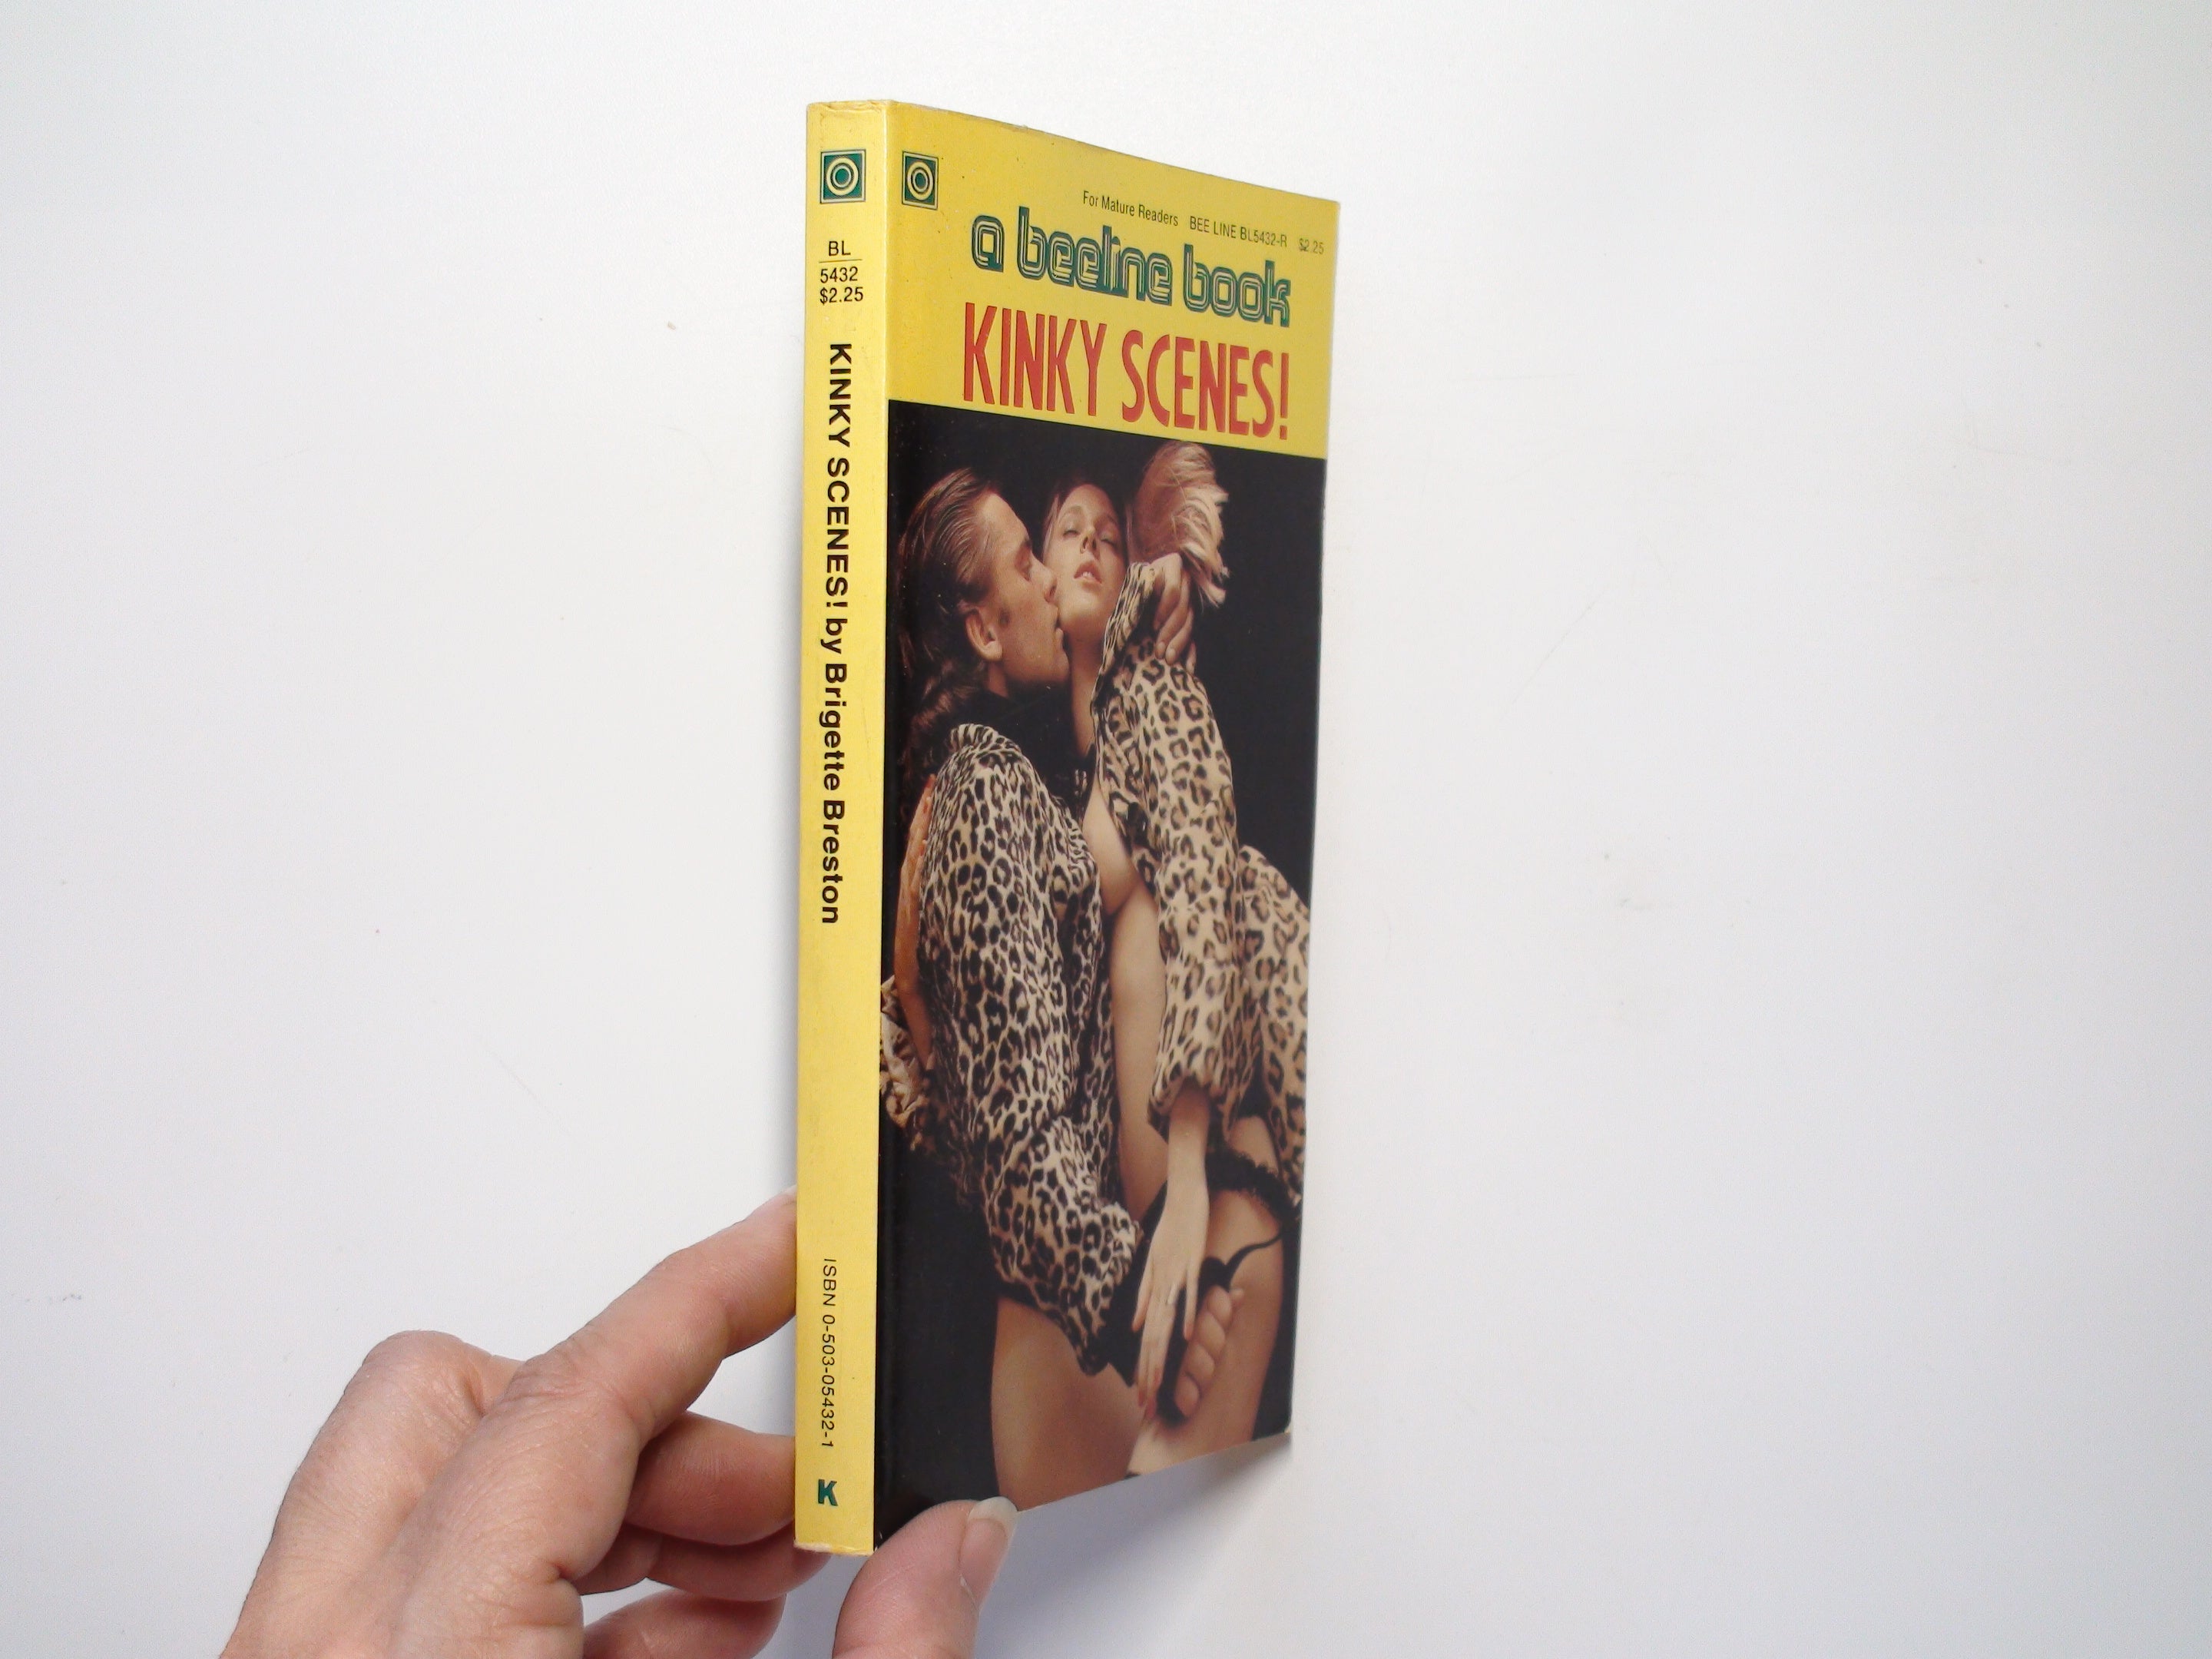 Kinky Scenes, by Brigette Breston, Bee Line Erotic Book, Paperback, 1977